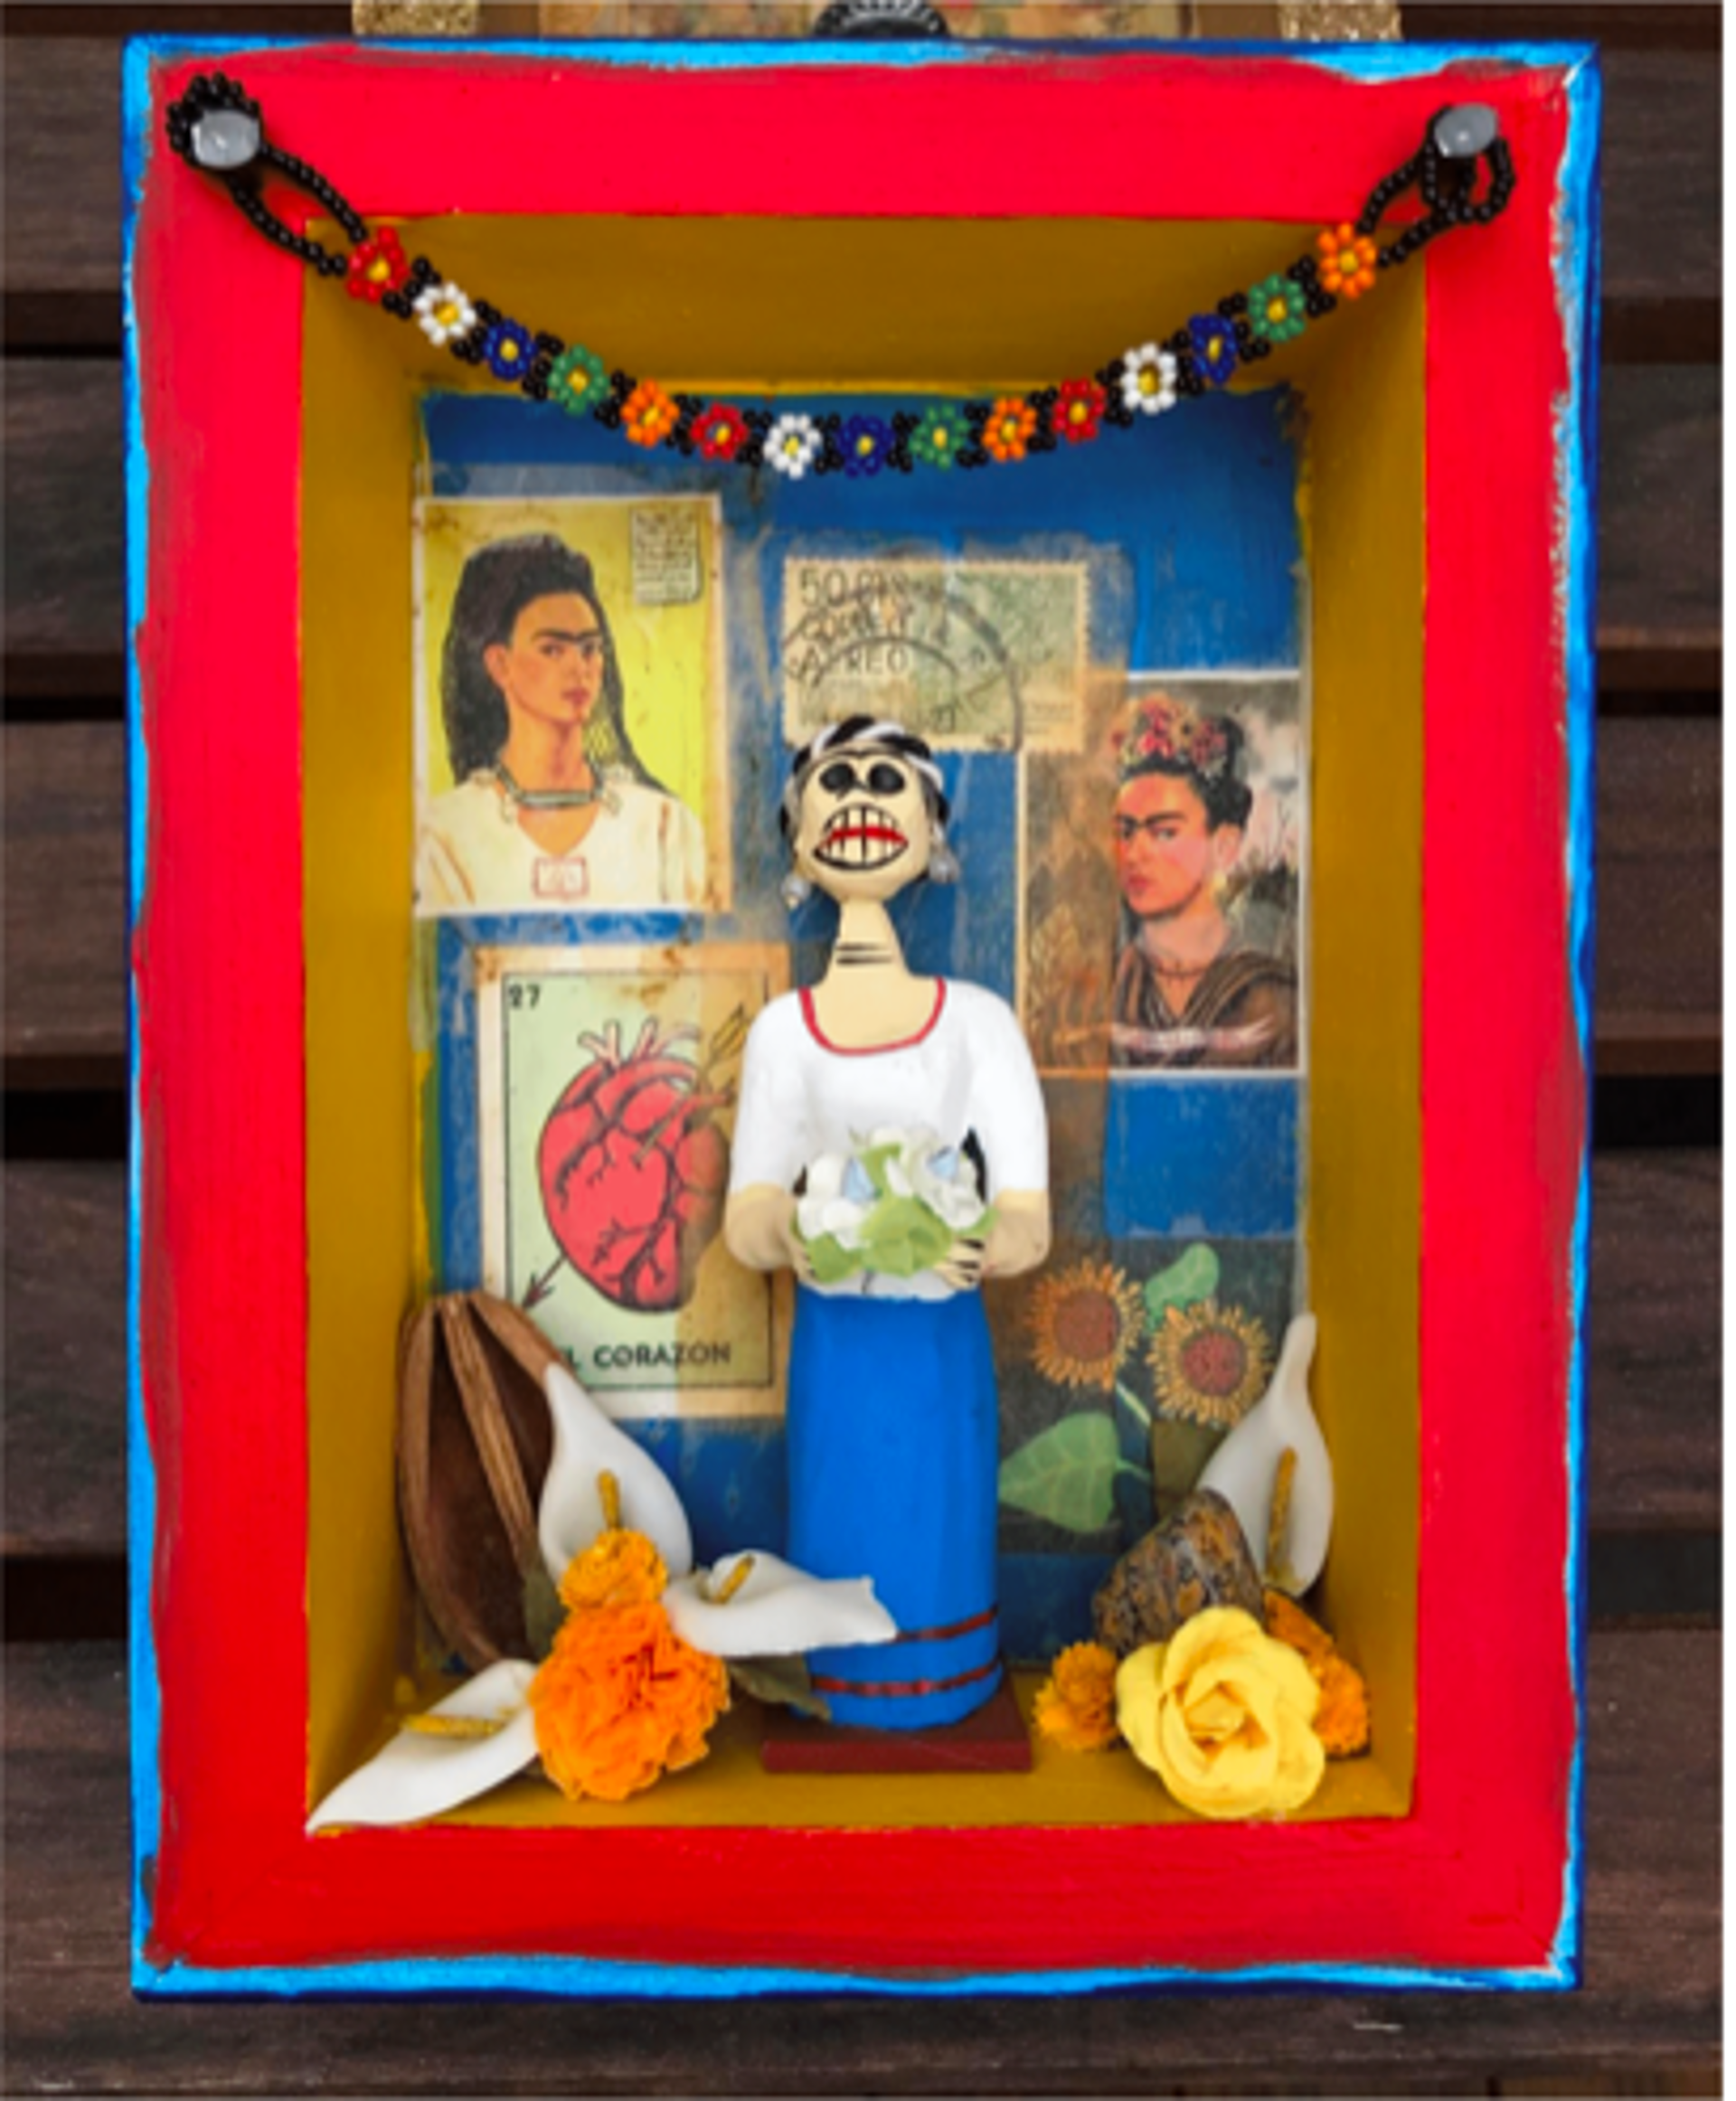 Offrenda for Frida III by Lori Haas